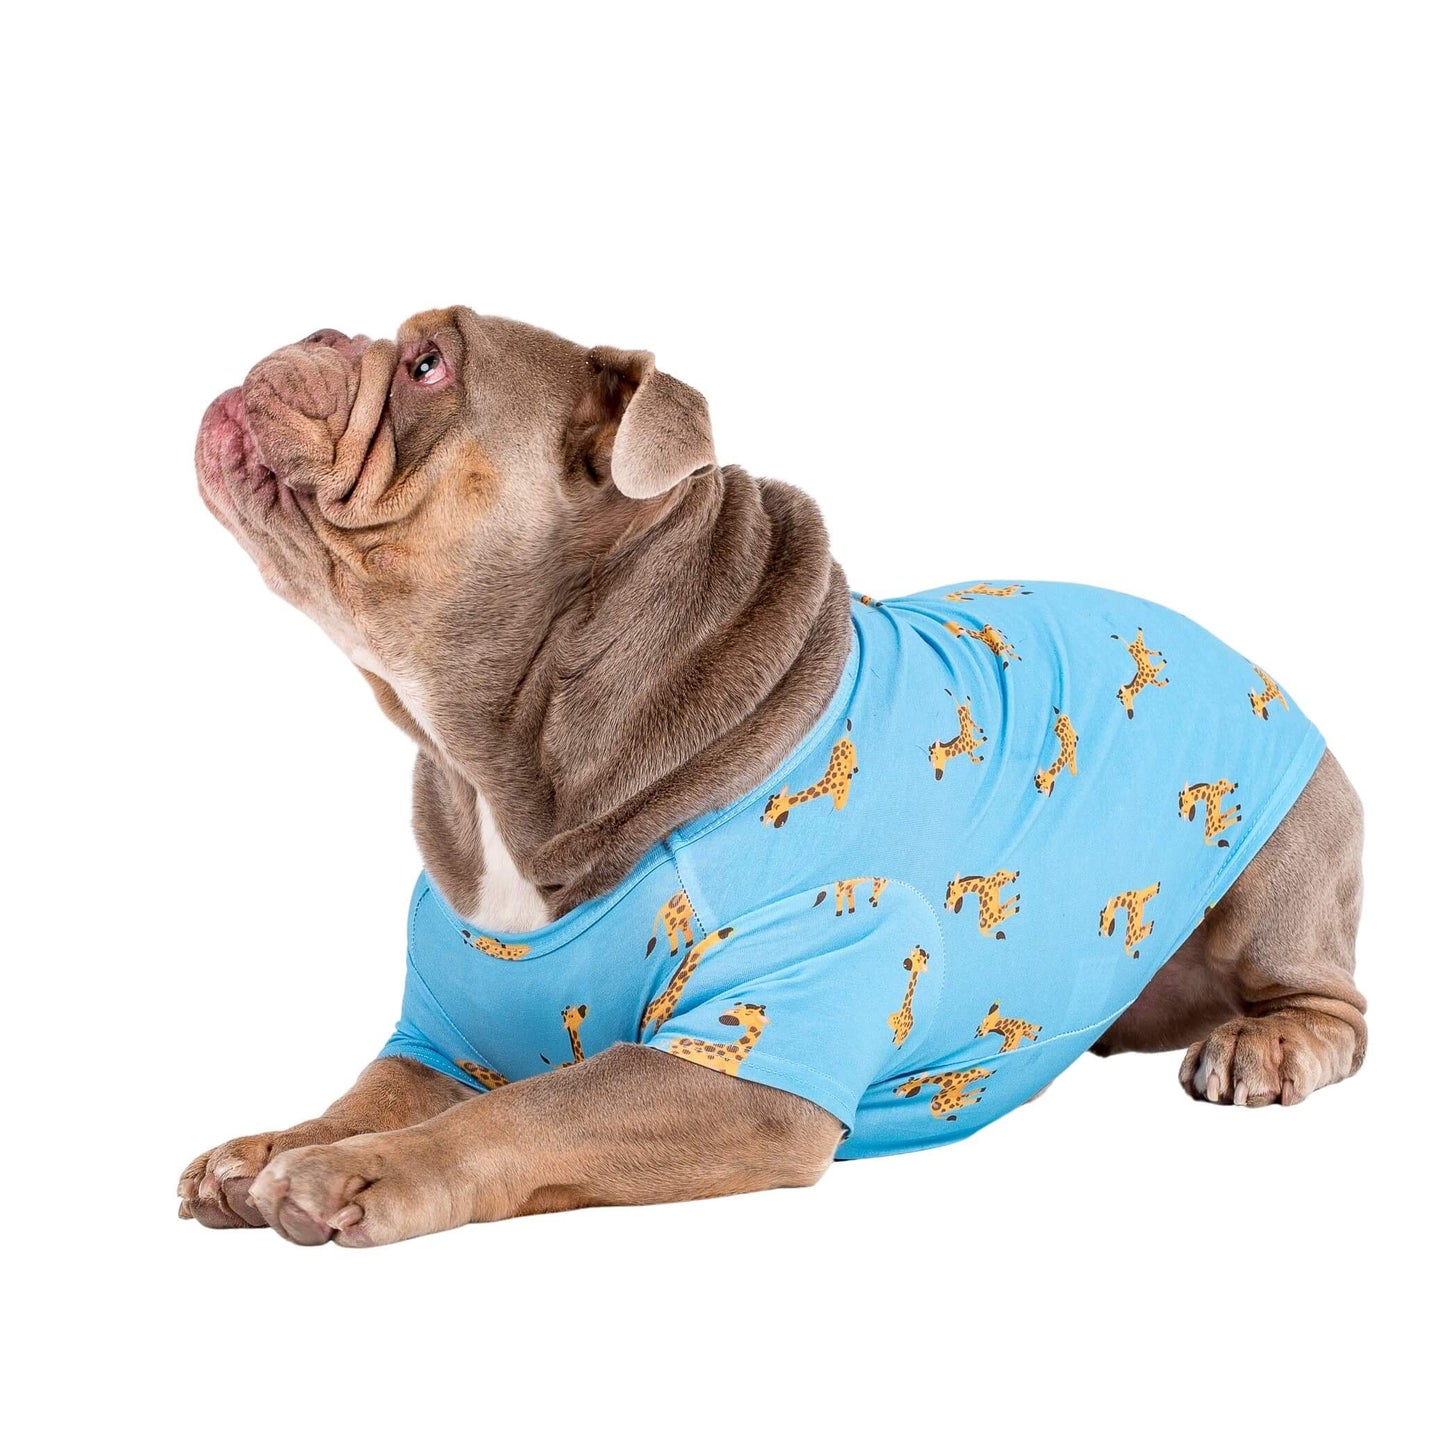 An English bulldog laying down wearing Gerald the Giraffe dog pyjamas made by Vibrant Hound. The dog pyjamas are blue, with girrafes printed on them.